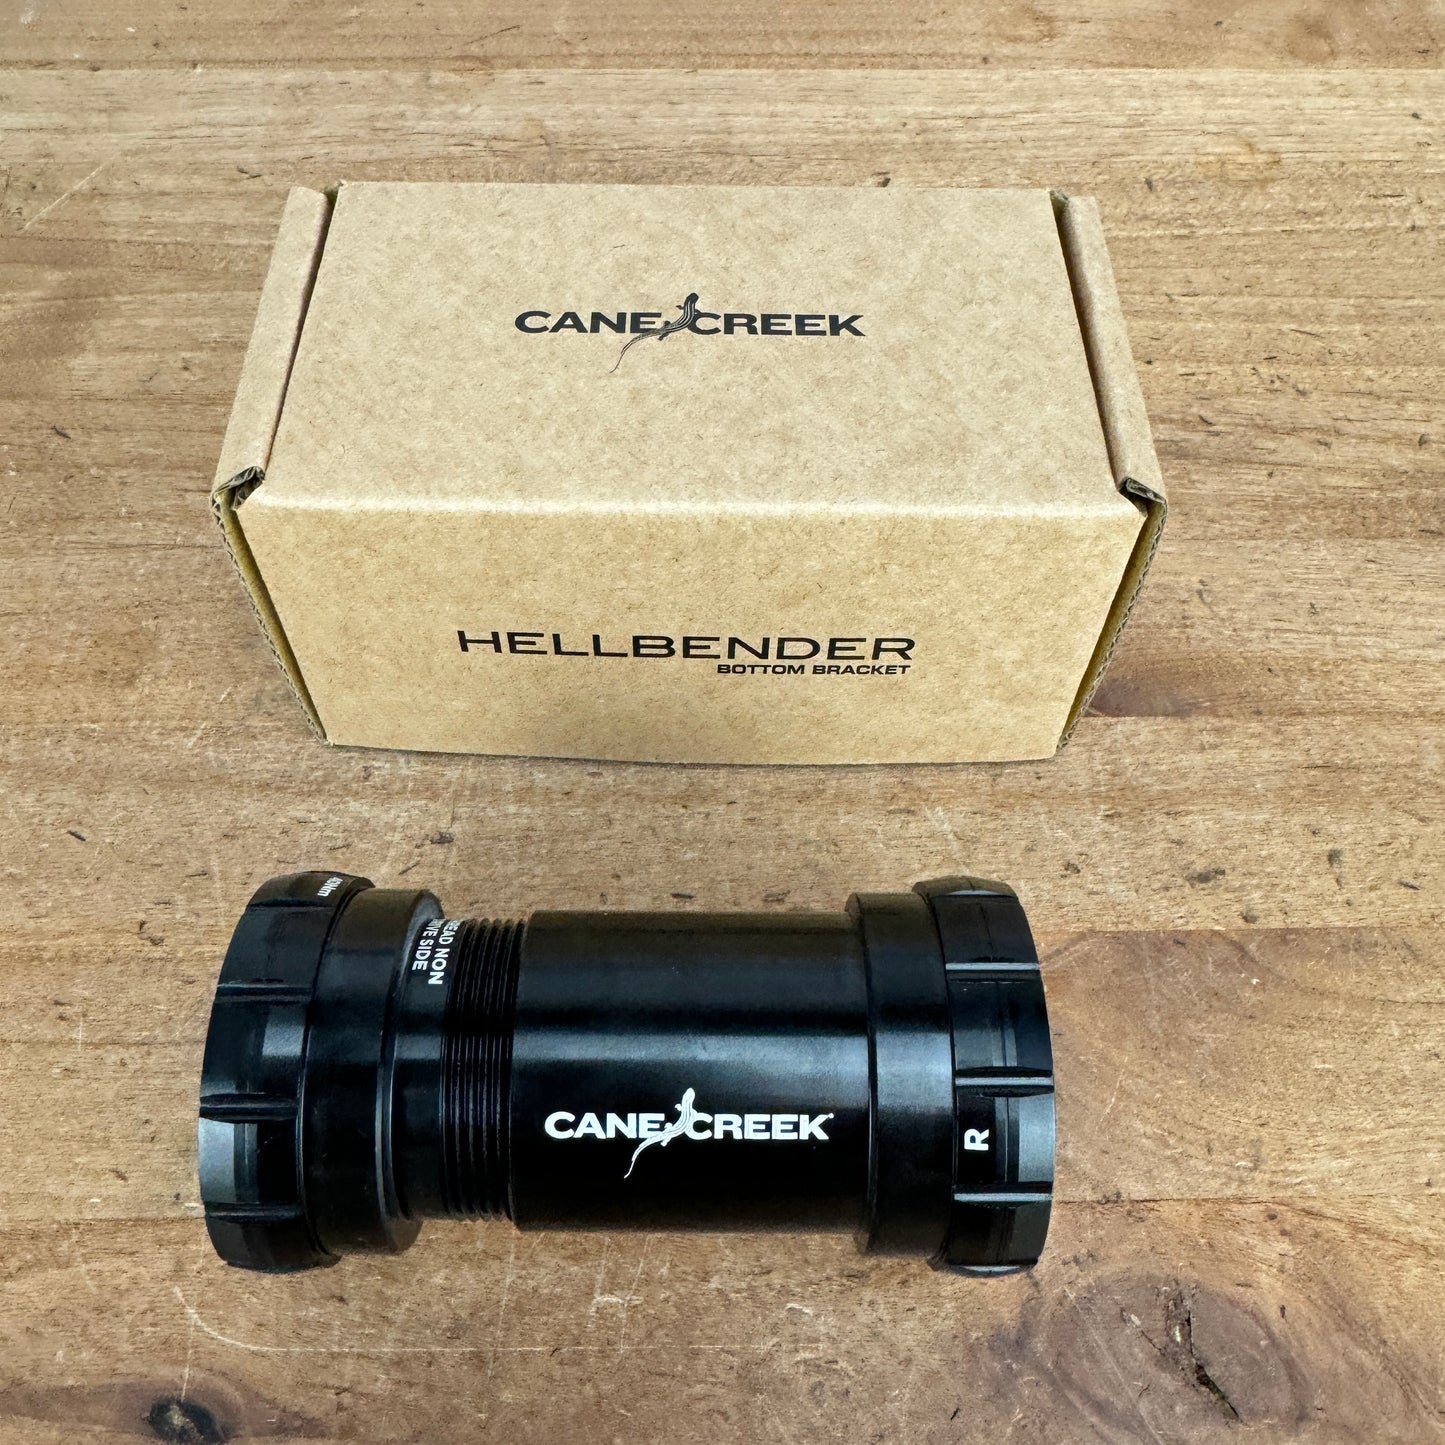 New! Cane Creek Hellbender 70 BB30 for 24mm Shimano Bottom Bracket BAI0187